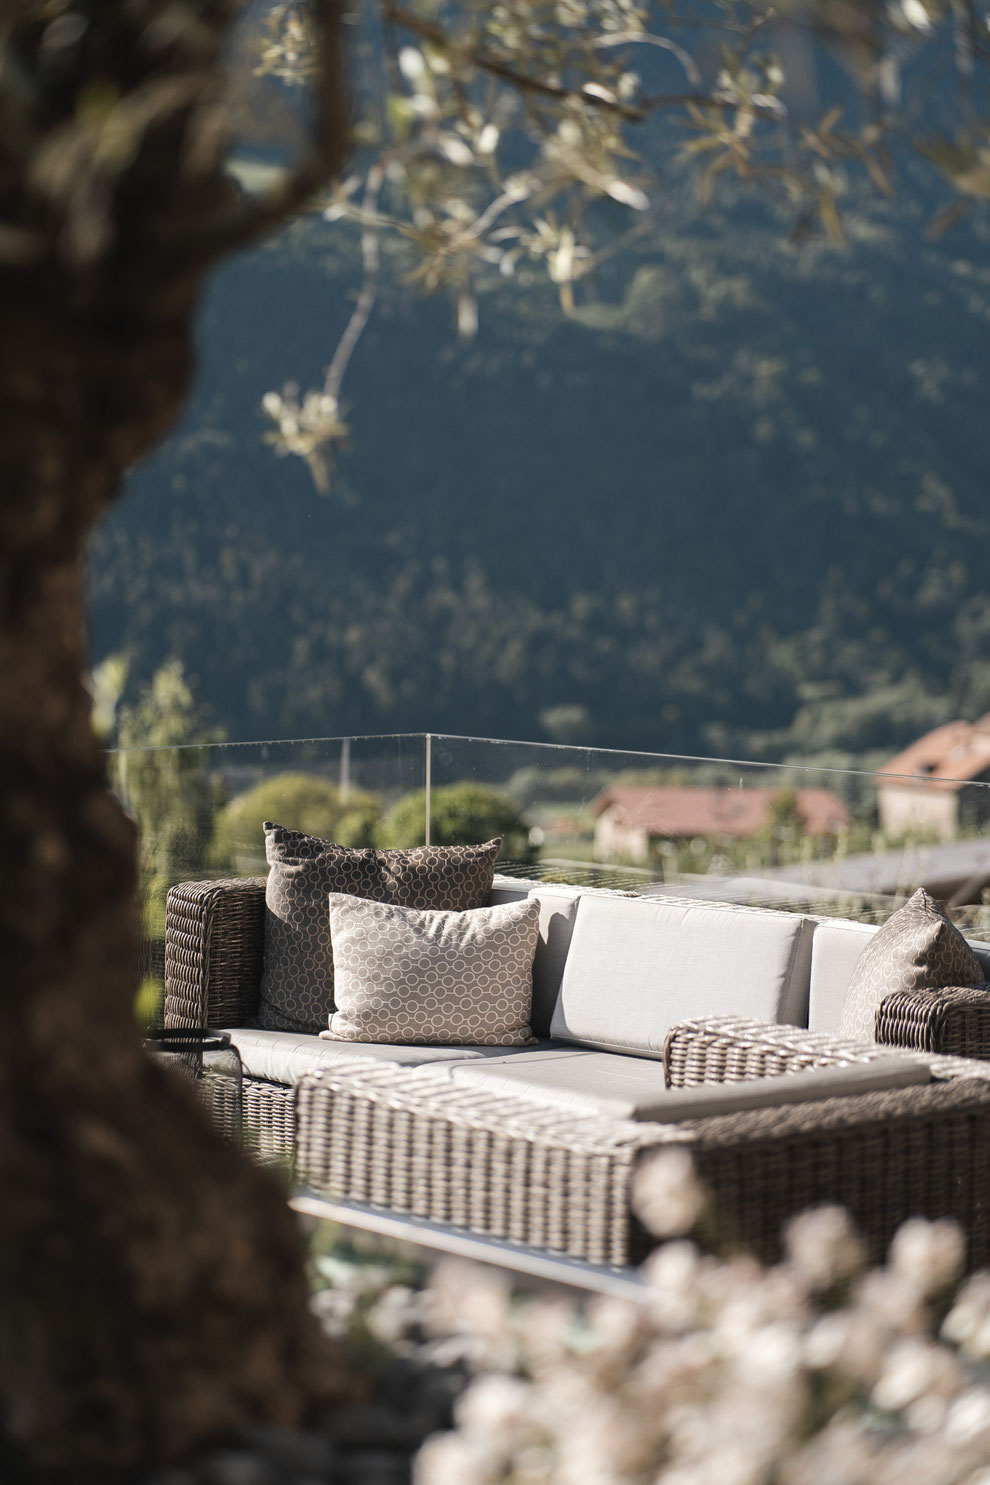 MAIR AM ORT LIVING - B&B Boutiquehotel | Vinschgau - Südtirol/Italien ... Member of Mountain Hideaways - die schönsten Hotels in den Alpen ©Lena Sulzenbacher